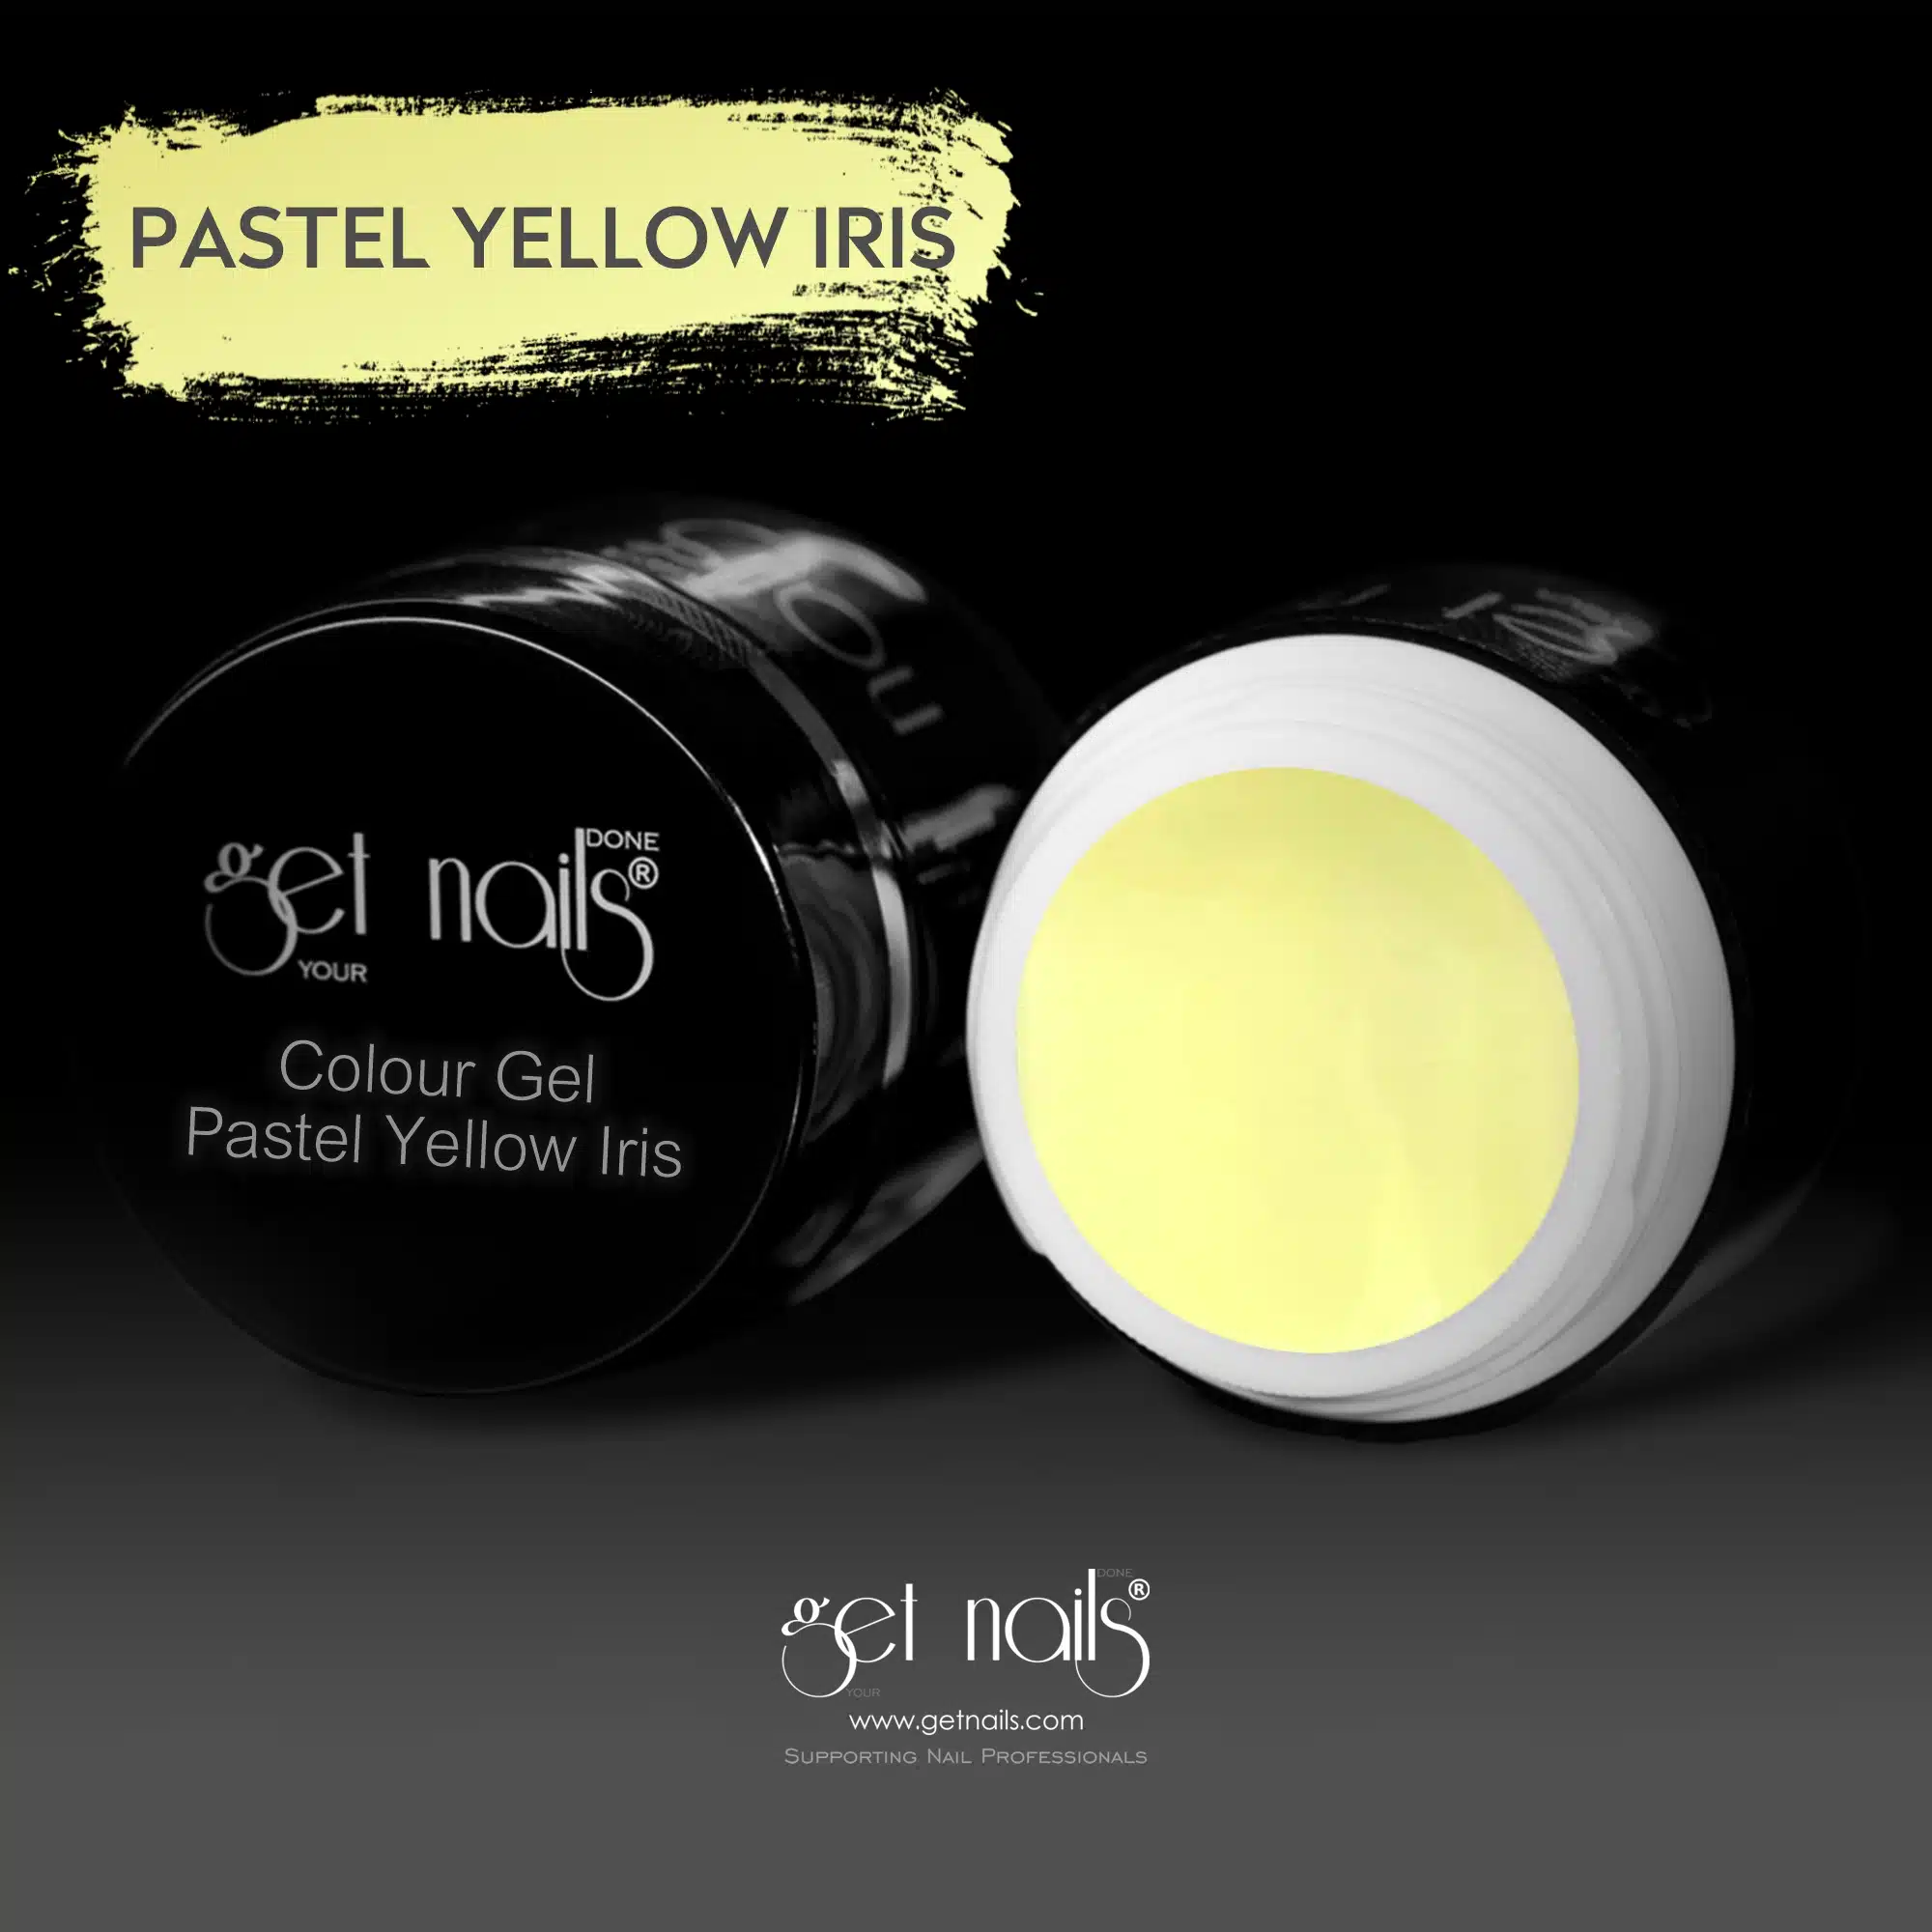 Get Nails Austria - Color Gel Pastel Yellow Iris 5g